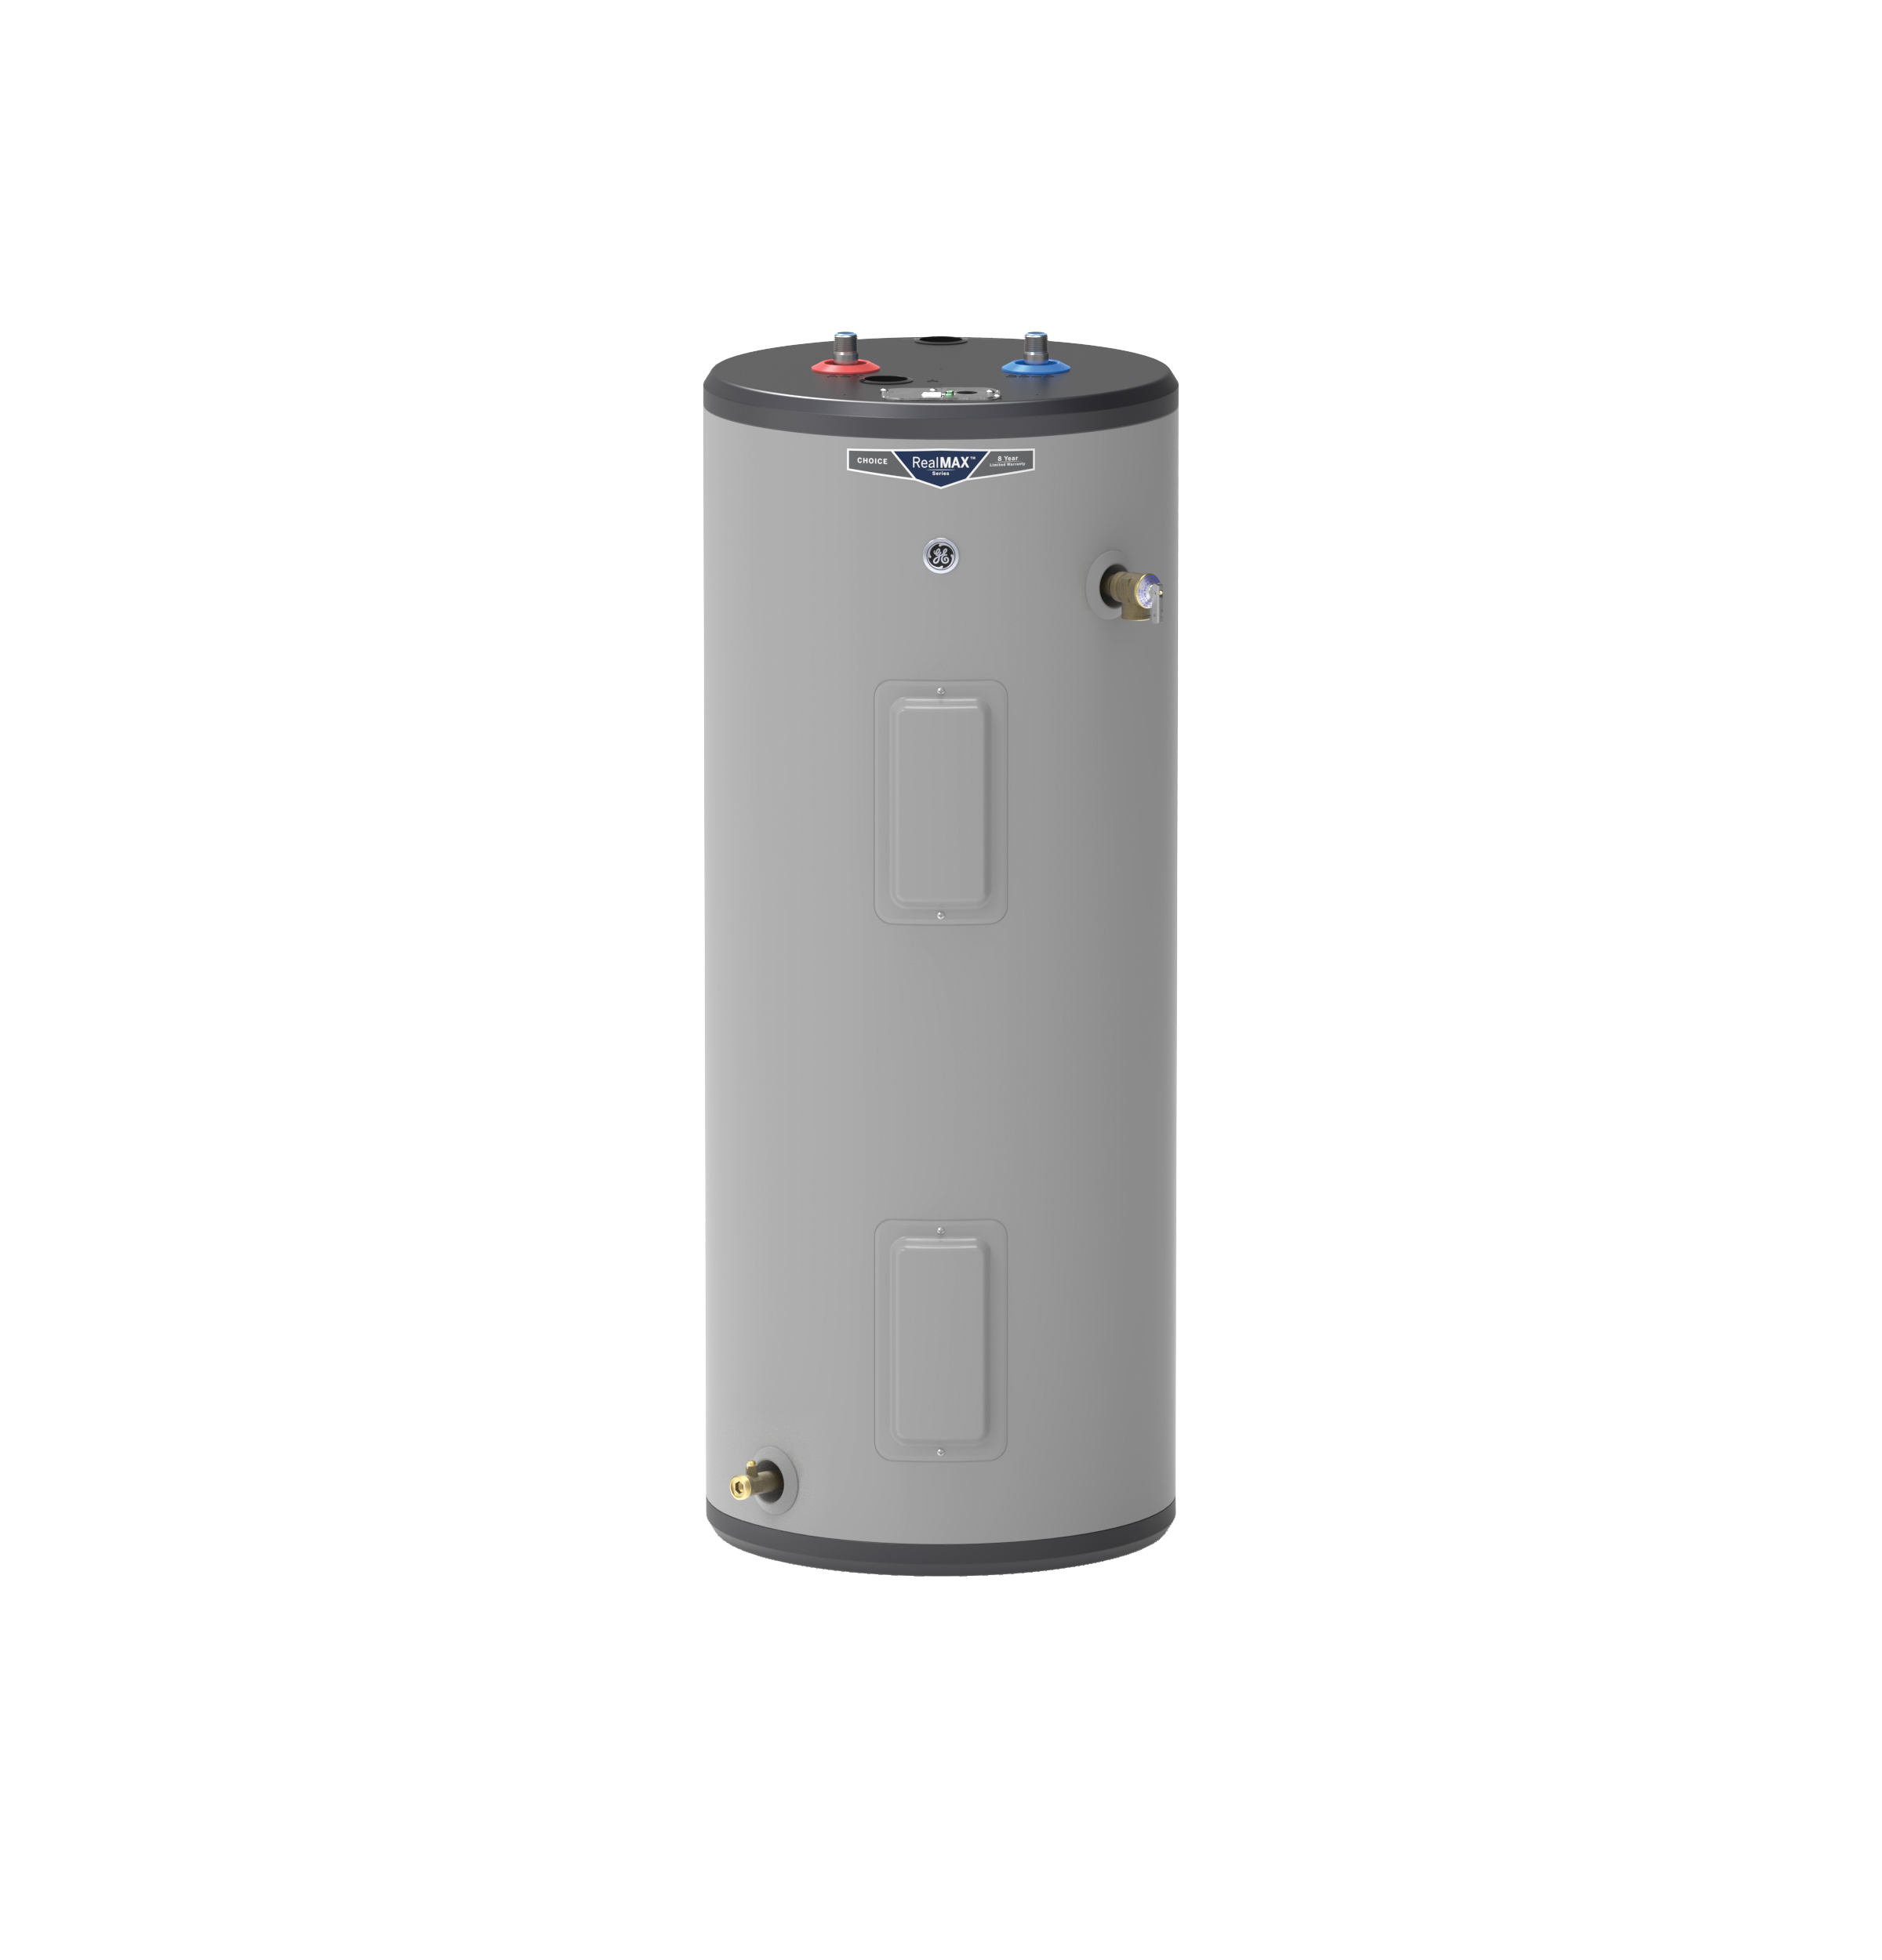 GE® 30 Gallon Tall Electric Water Heater